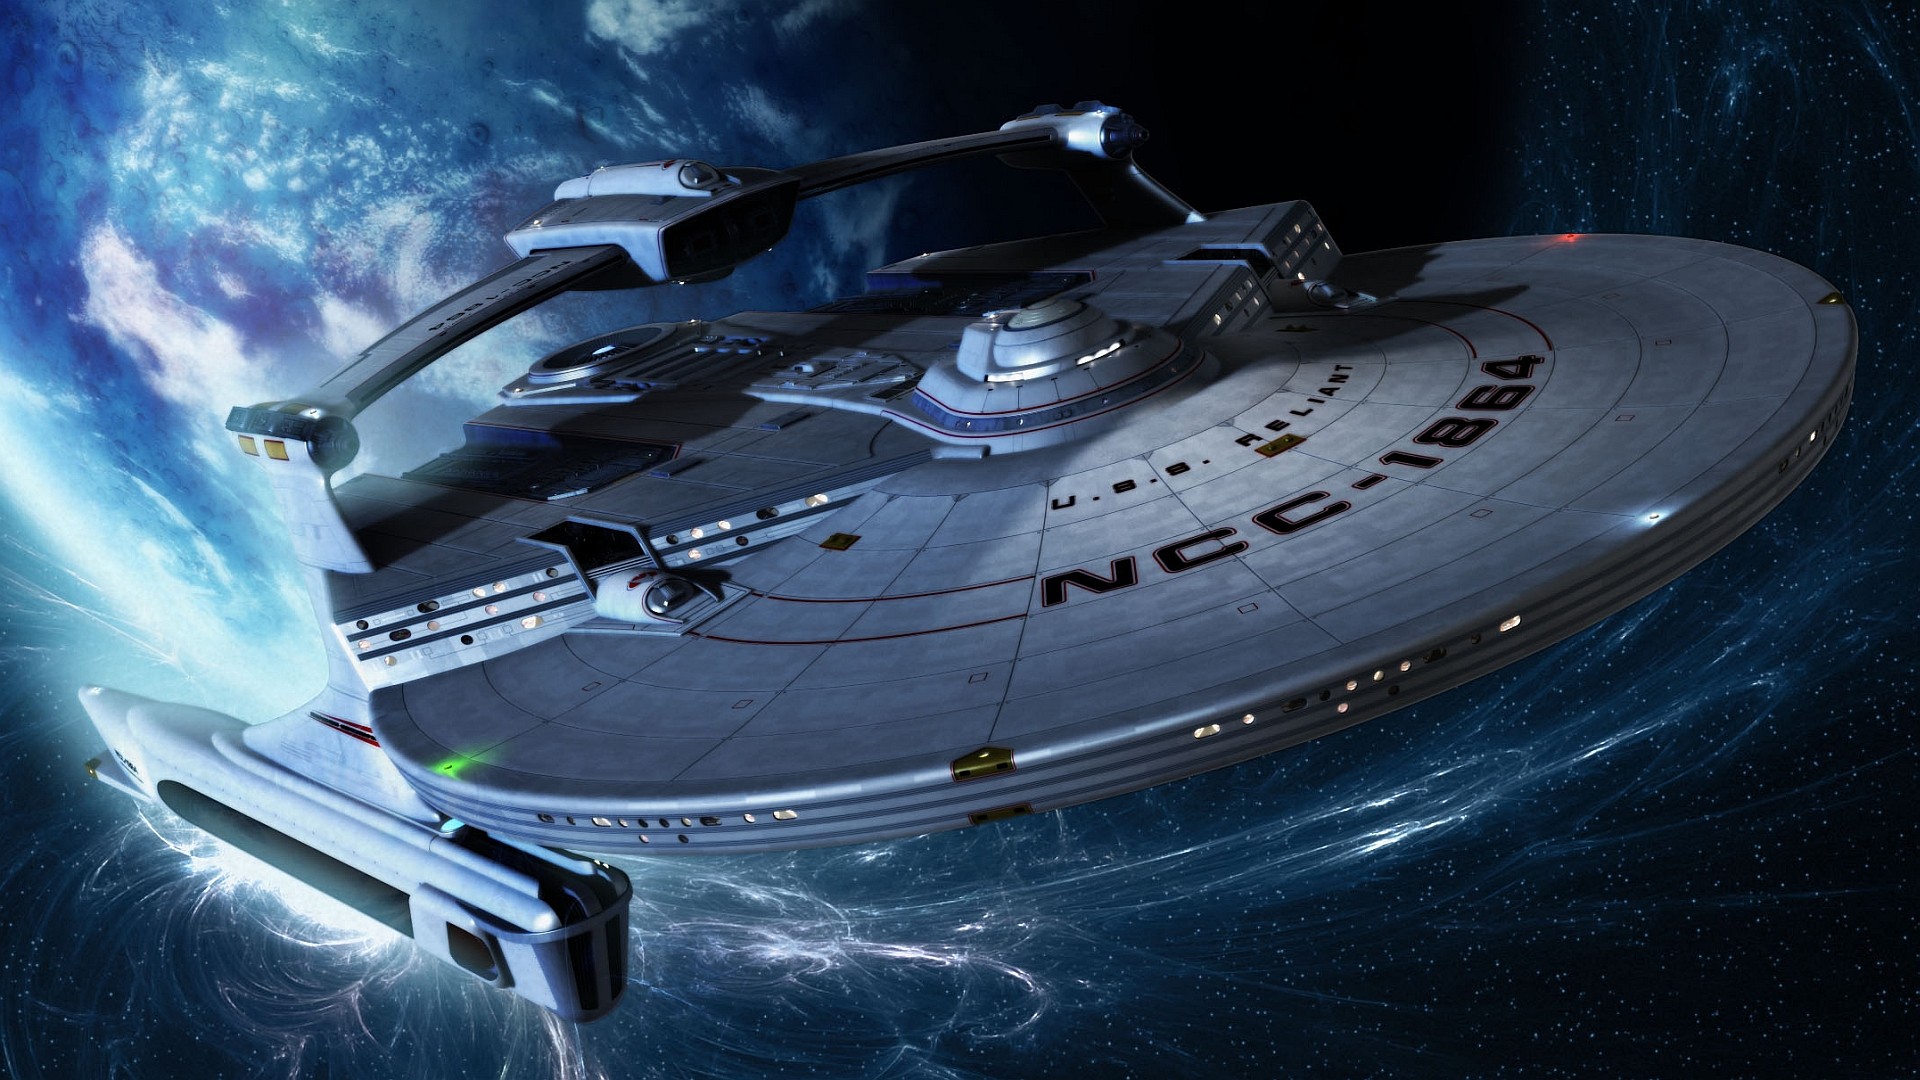 General 1920x1080 Star Trek artwork USS Reliant (Spaceship) spaceship vehicle digital art blue Star Trek Ships science fiction